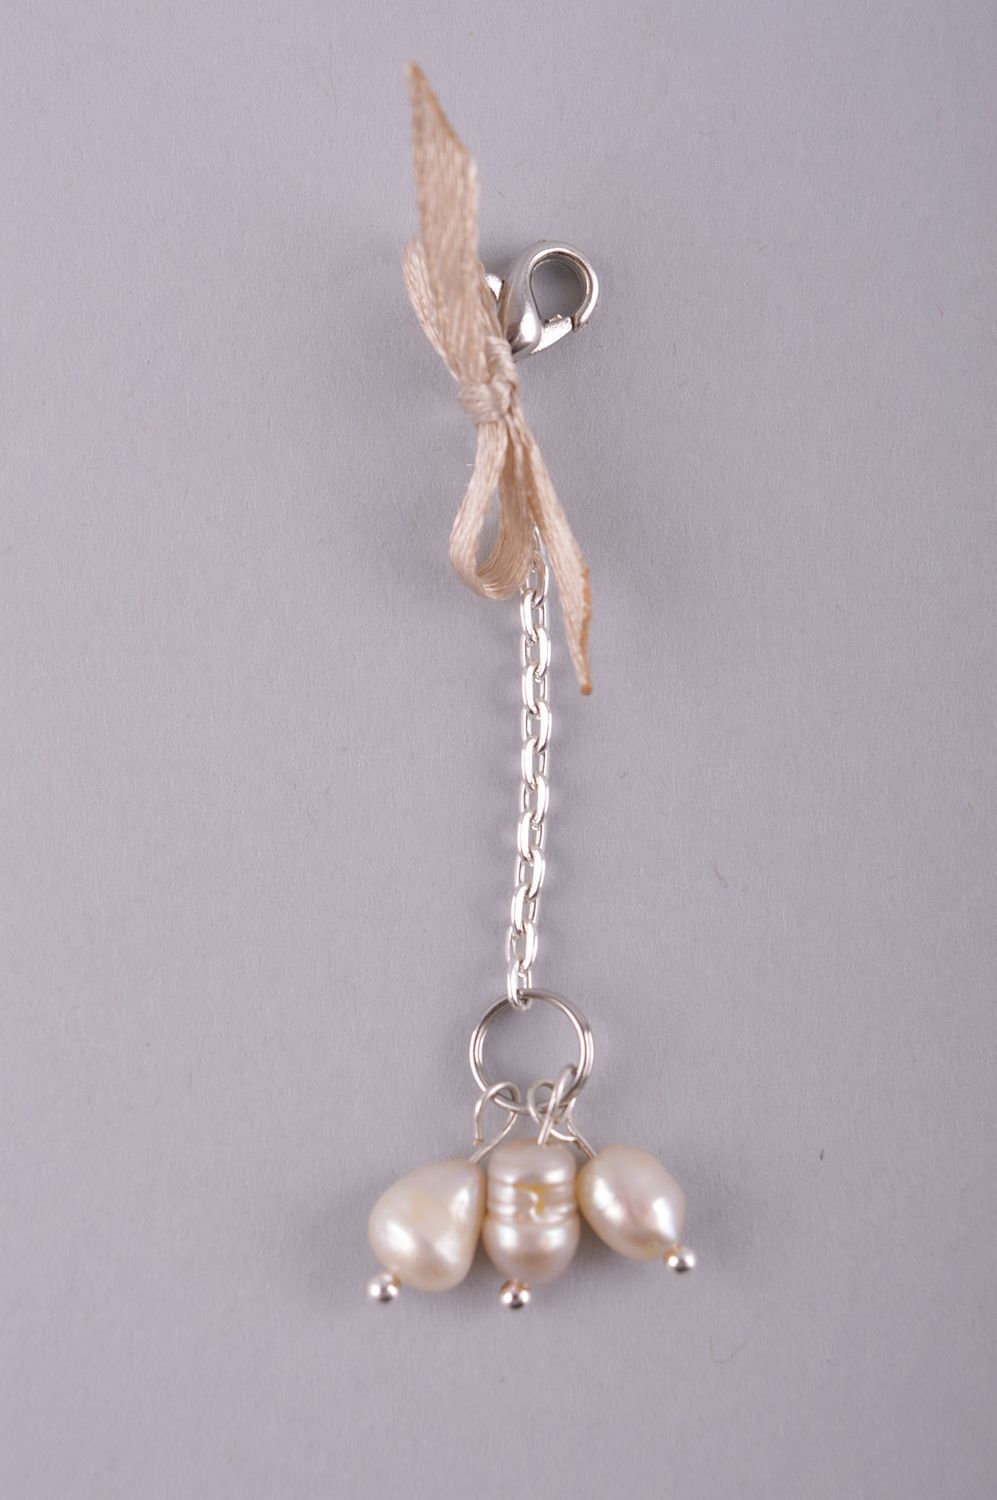 Unusual handmade beaded keychain cool keyrings fashion accessories gift ideas photo 2